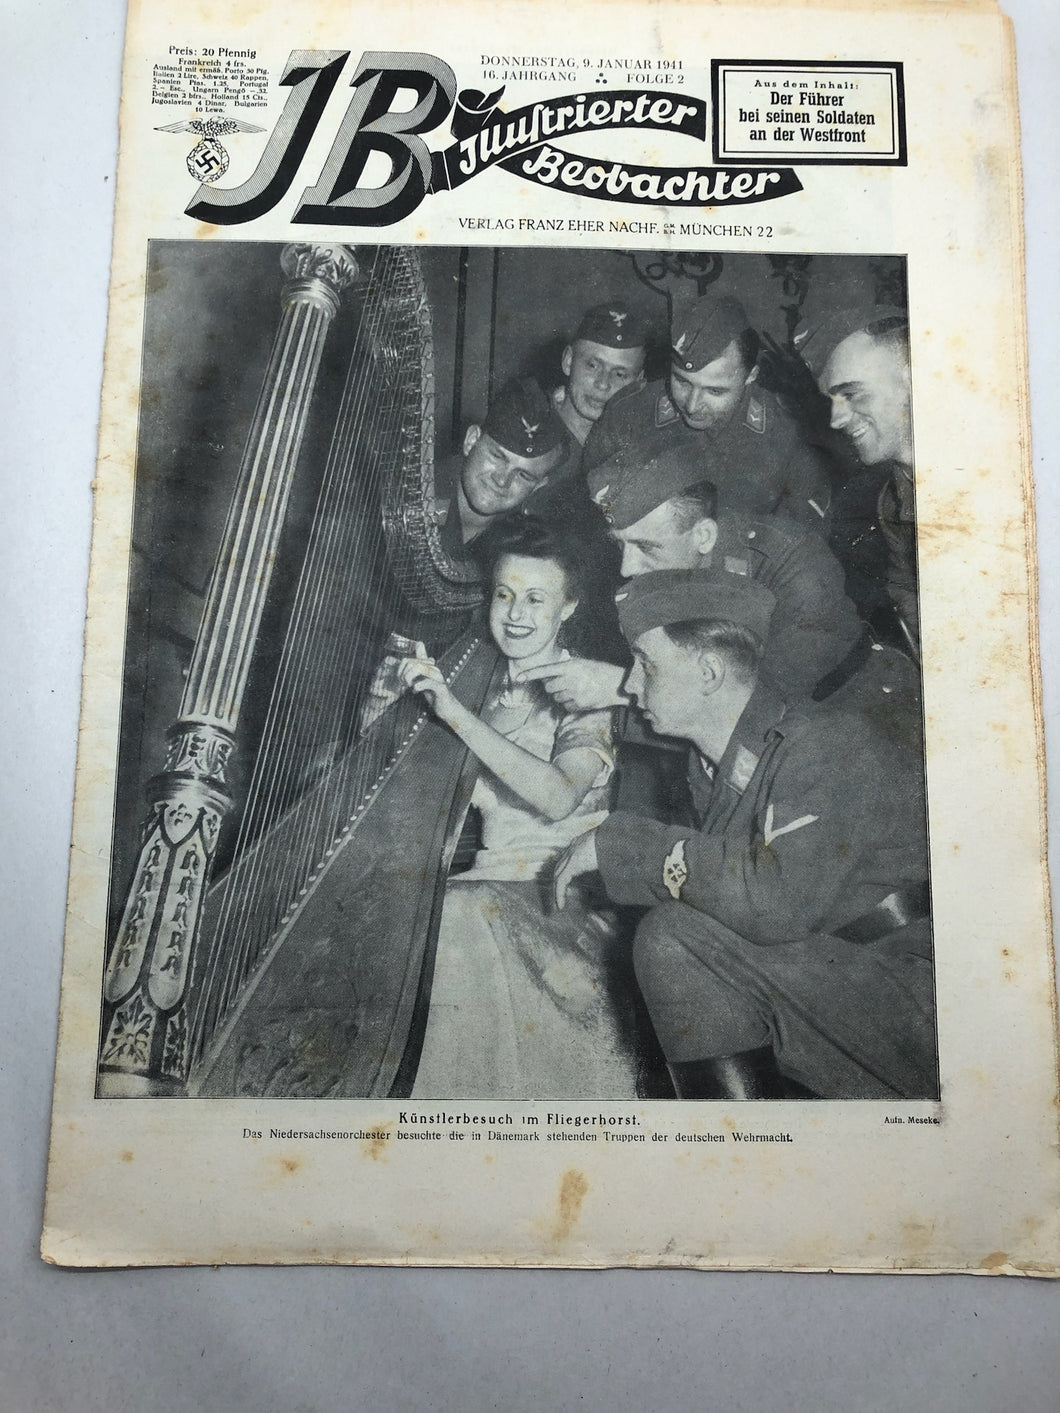 JB Juustrierter Beobachter NSDAP Magazine Original WW2 German - 9 January 1941